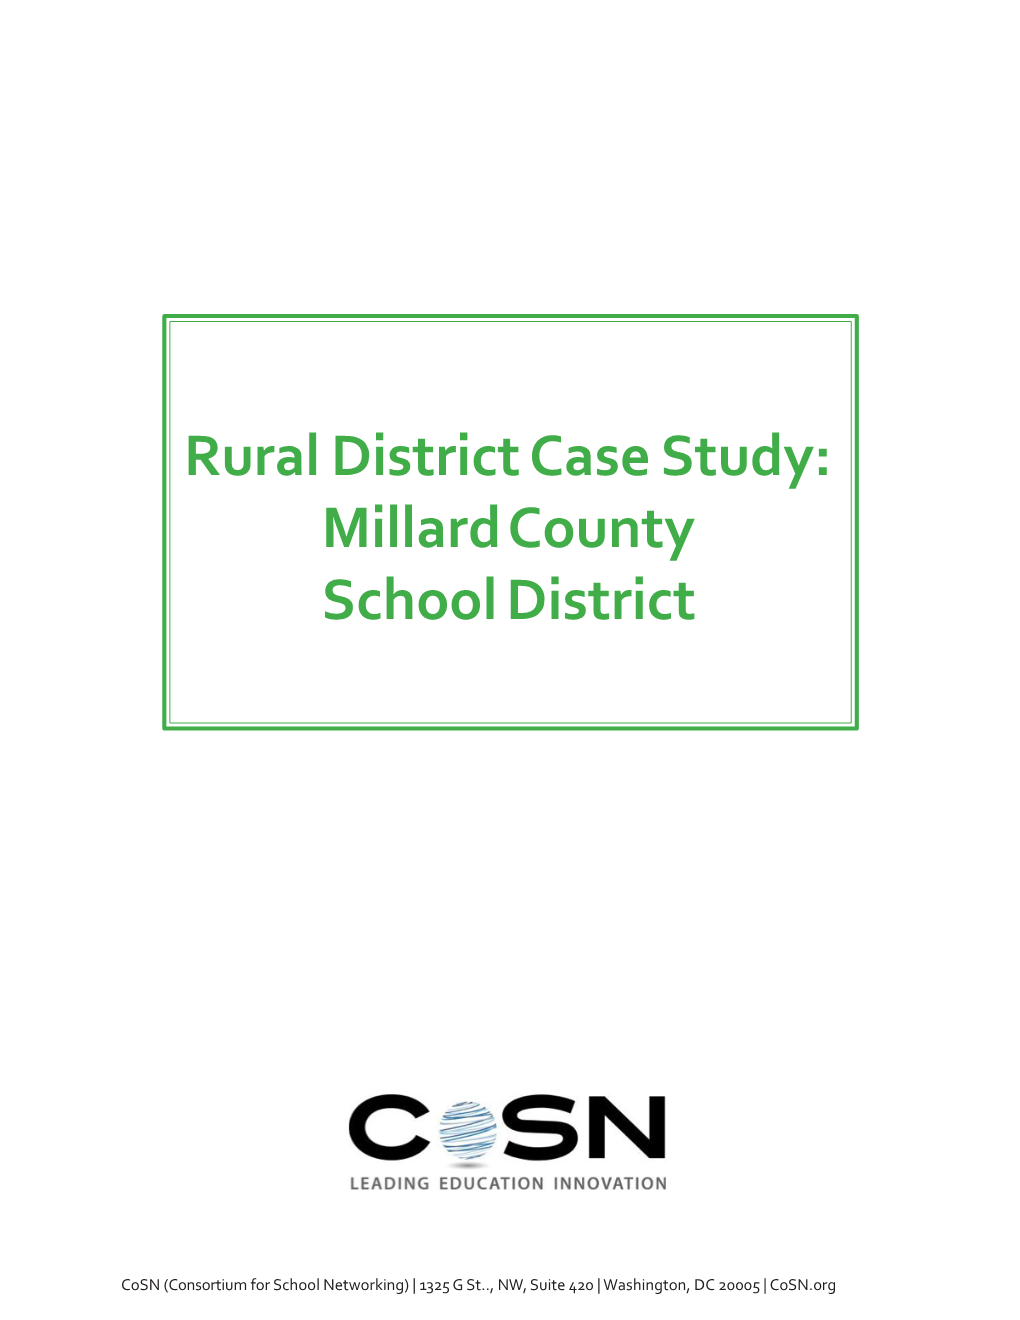 Rural District Case Study: Millard County School District